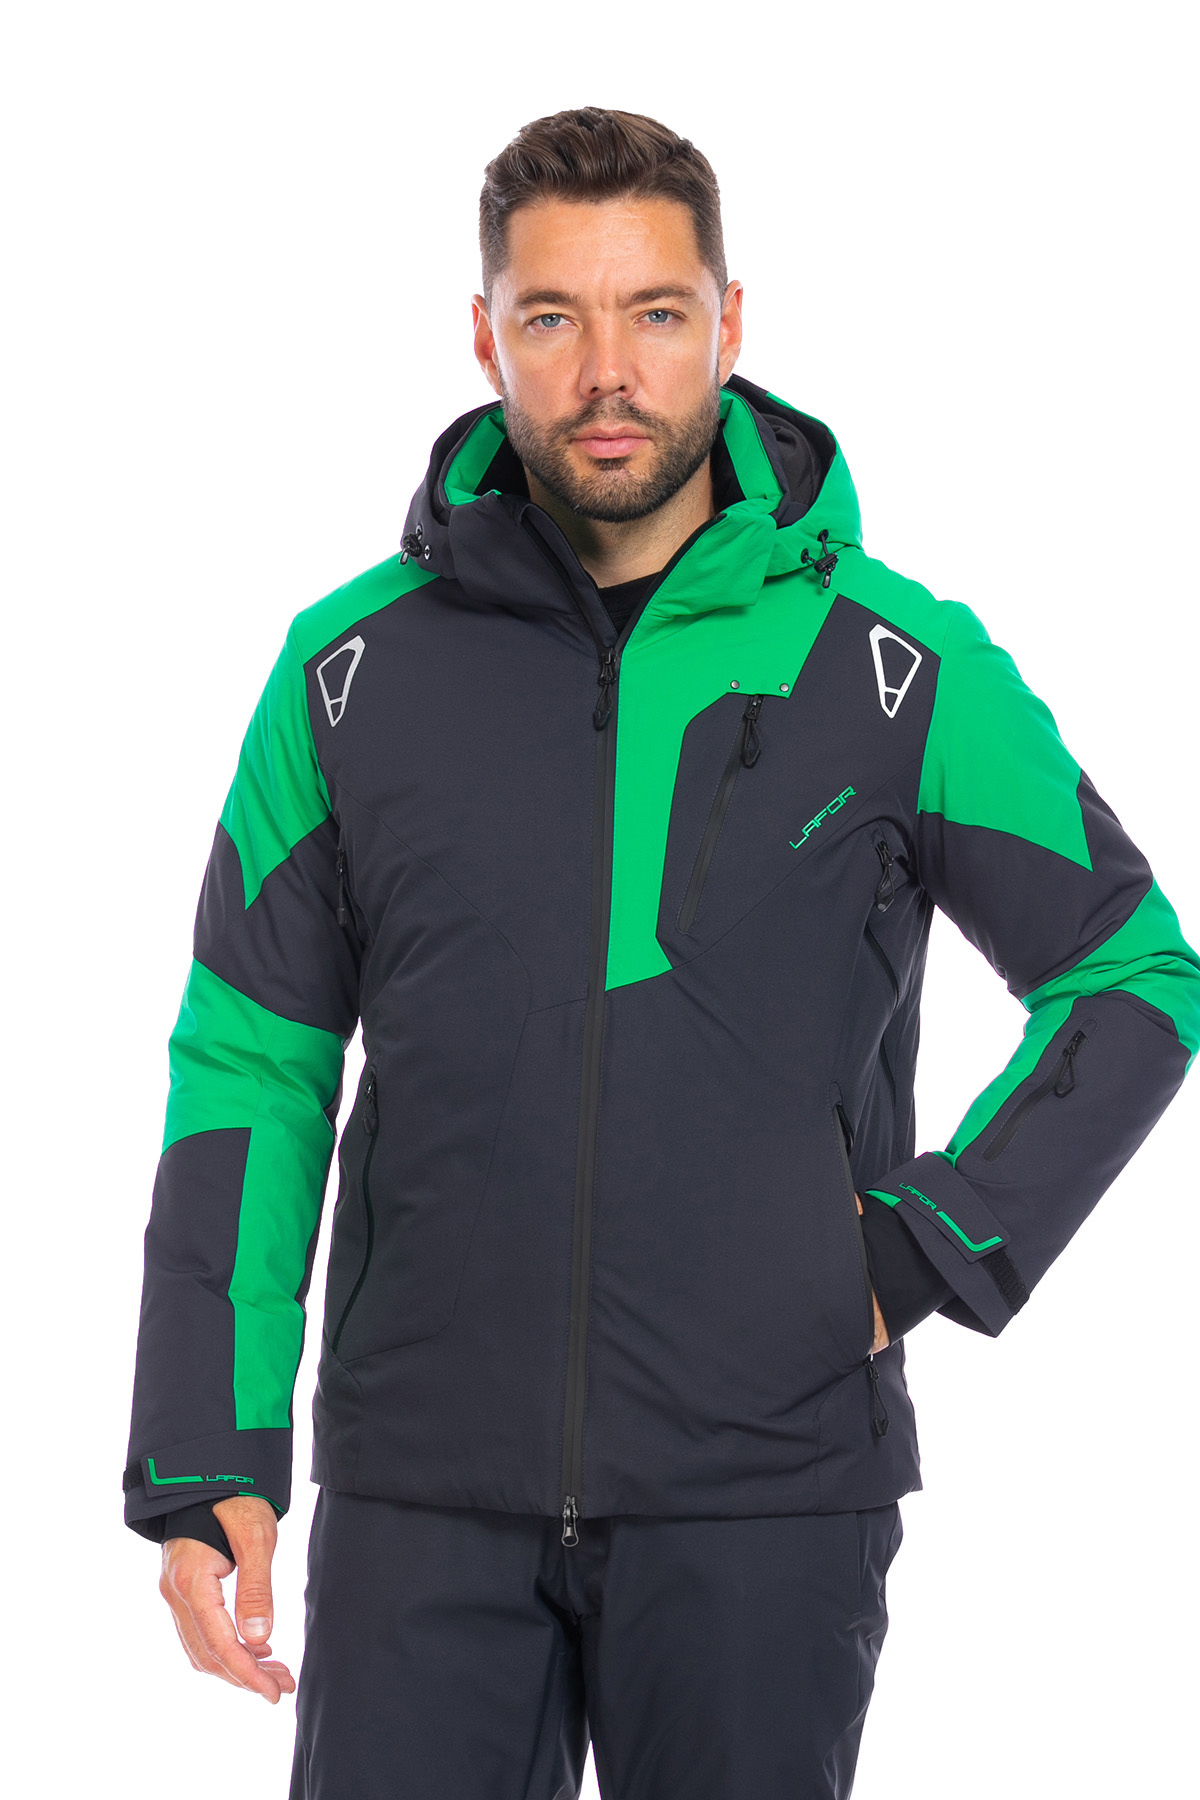 Мужская горнолыжная Куртка Lafor Зеленый, 767053 (52, xl)